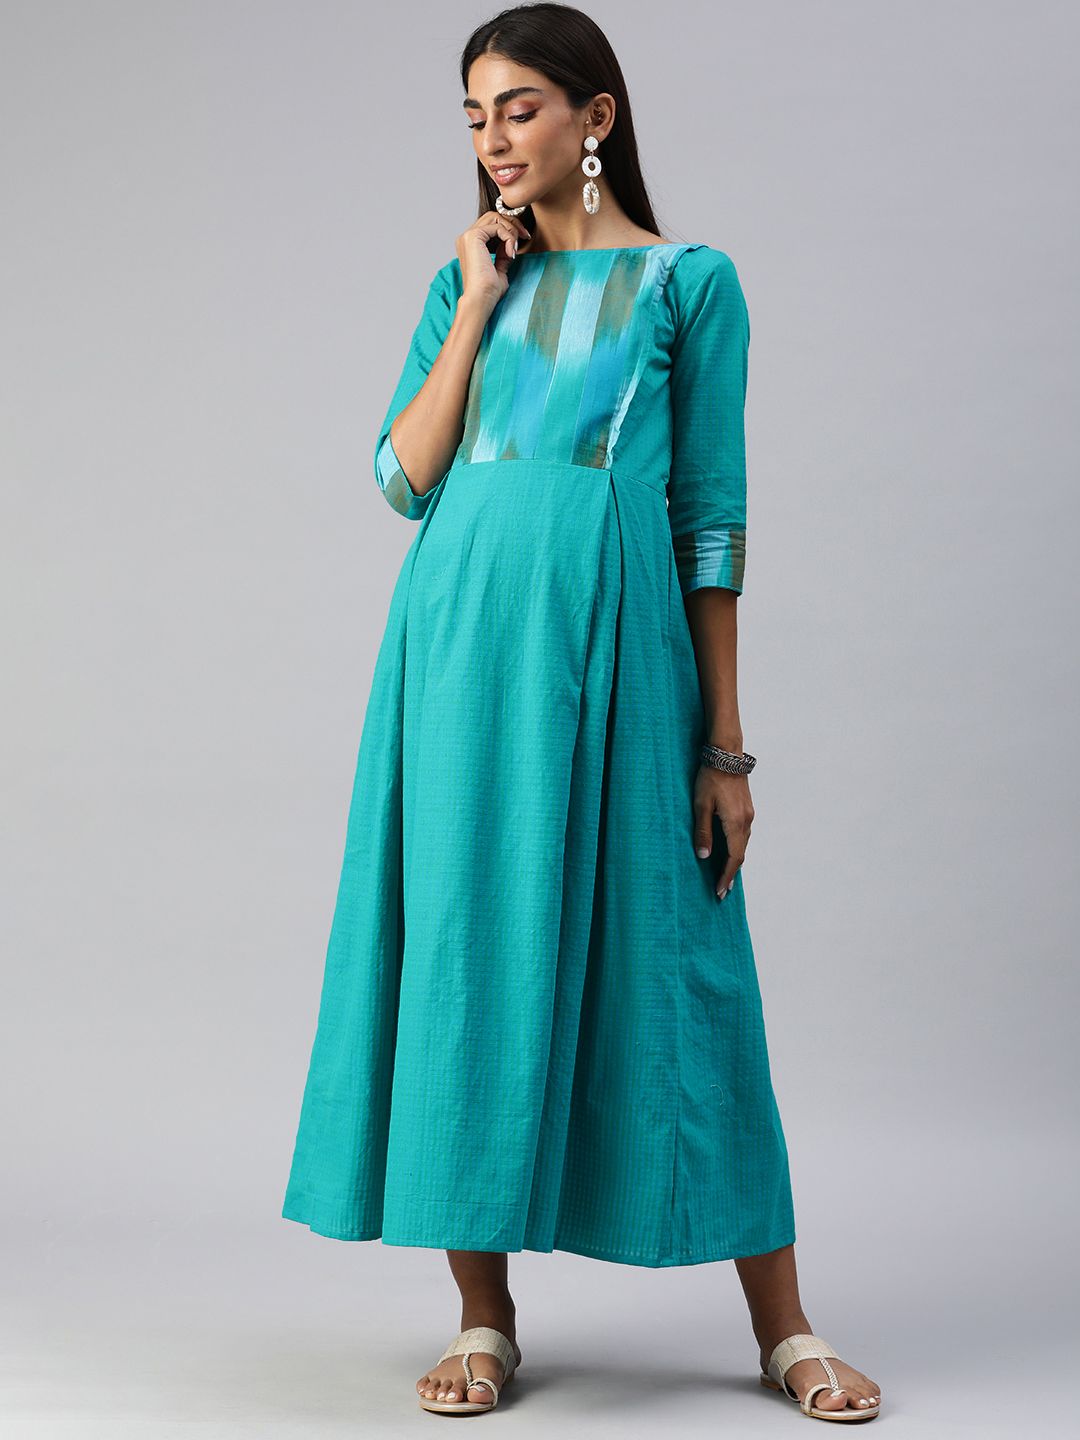 Swishchick Blue Solid Cotton Maternity Midi Dress Price in India